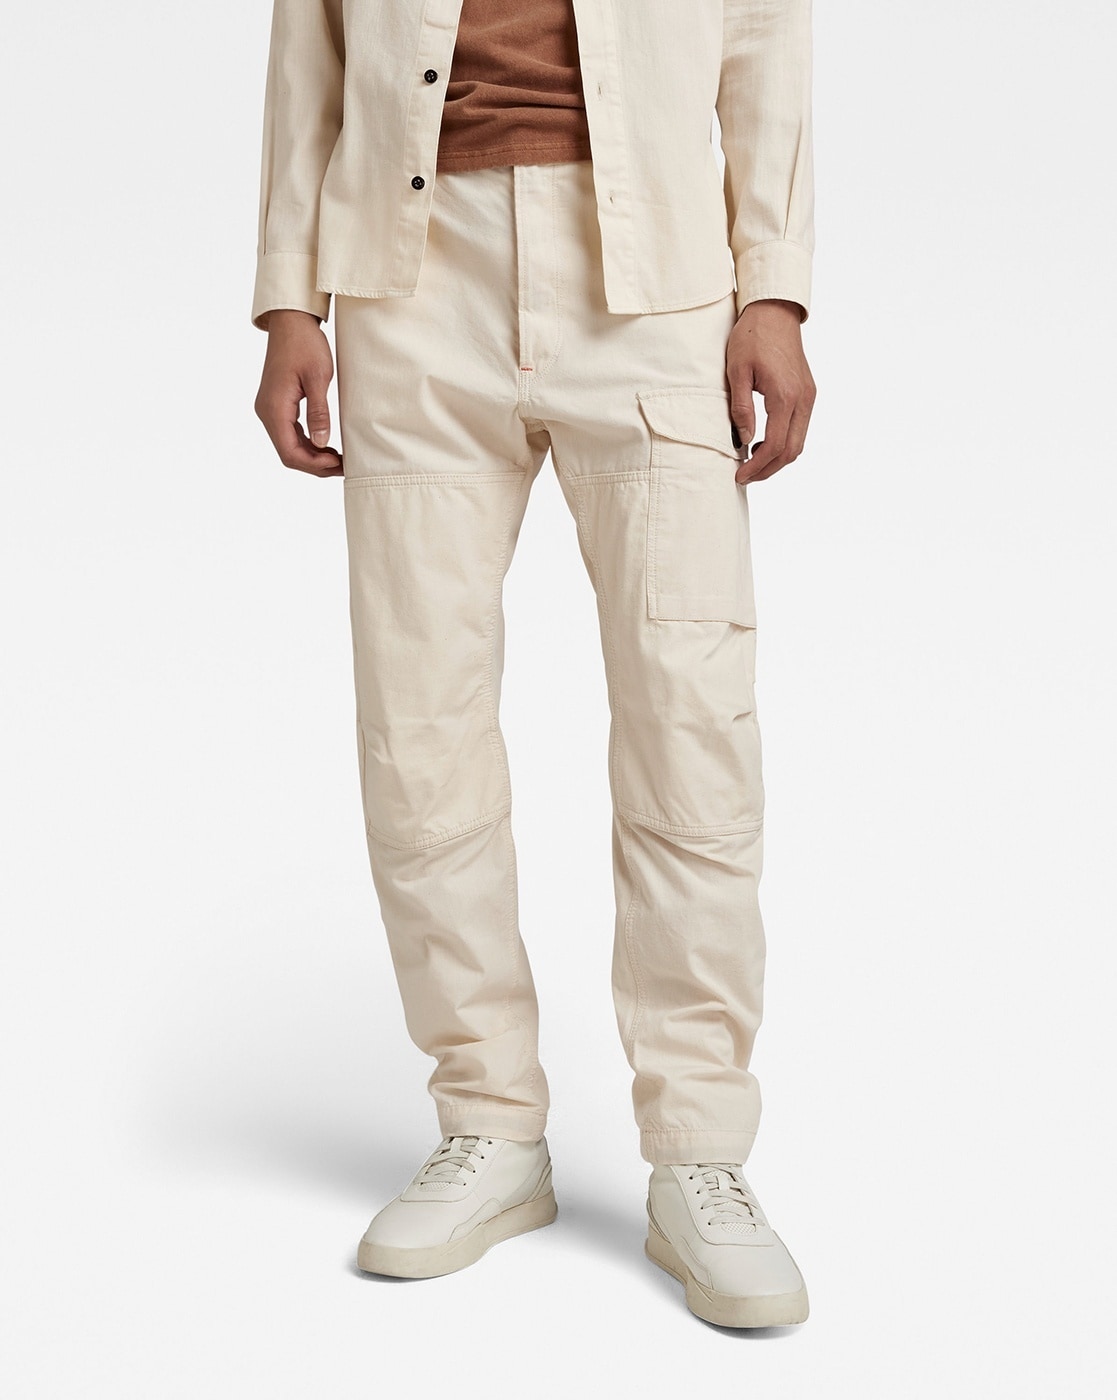 Men's G-Star RAW Arctic Omega 3D Loose Brown Cargo Pants Size 31x32 | eBay